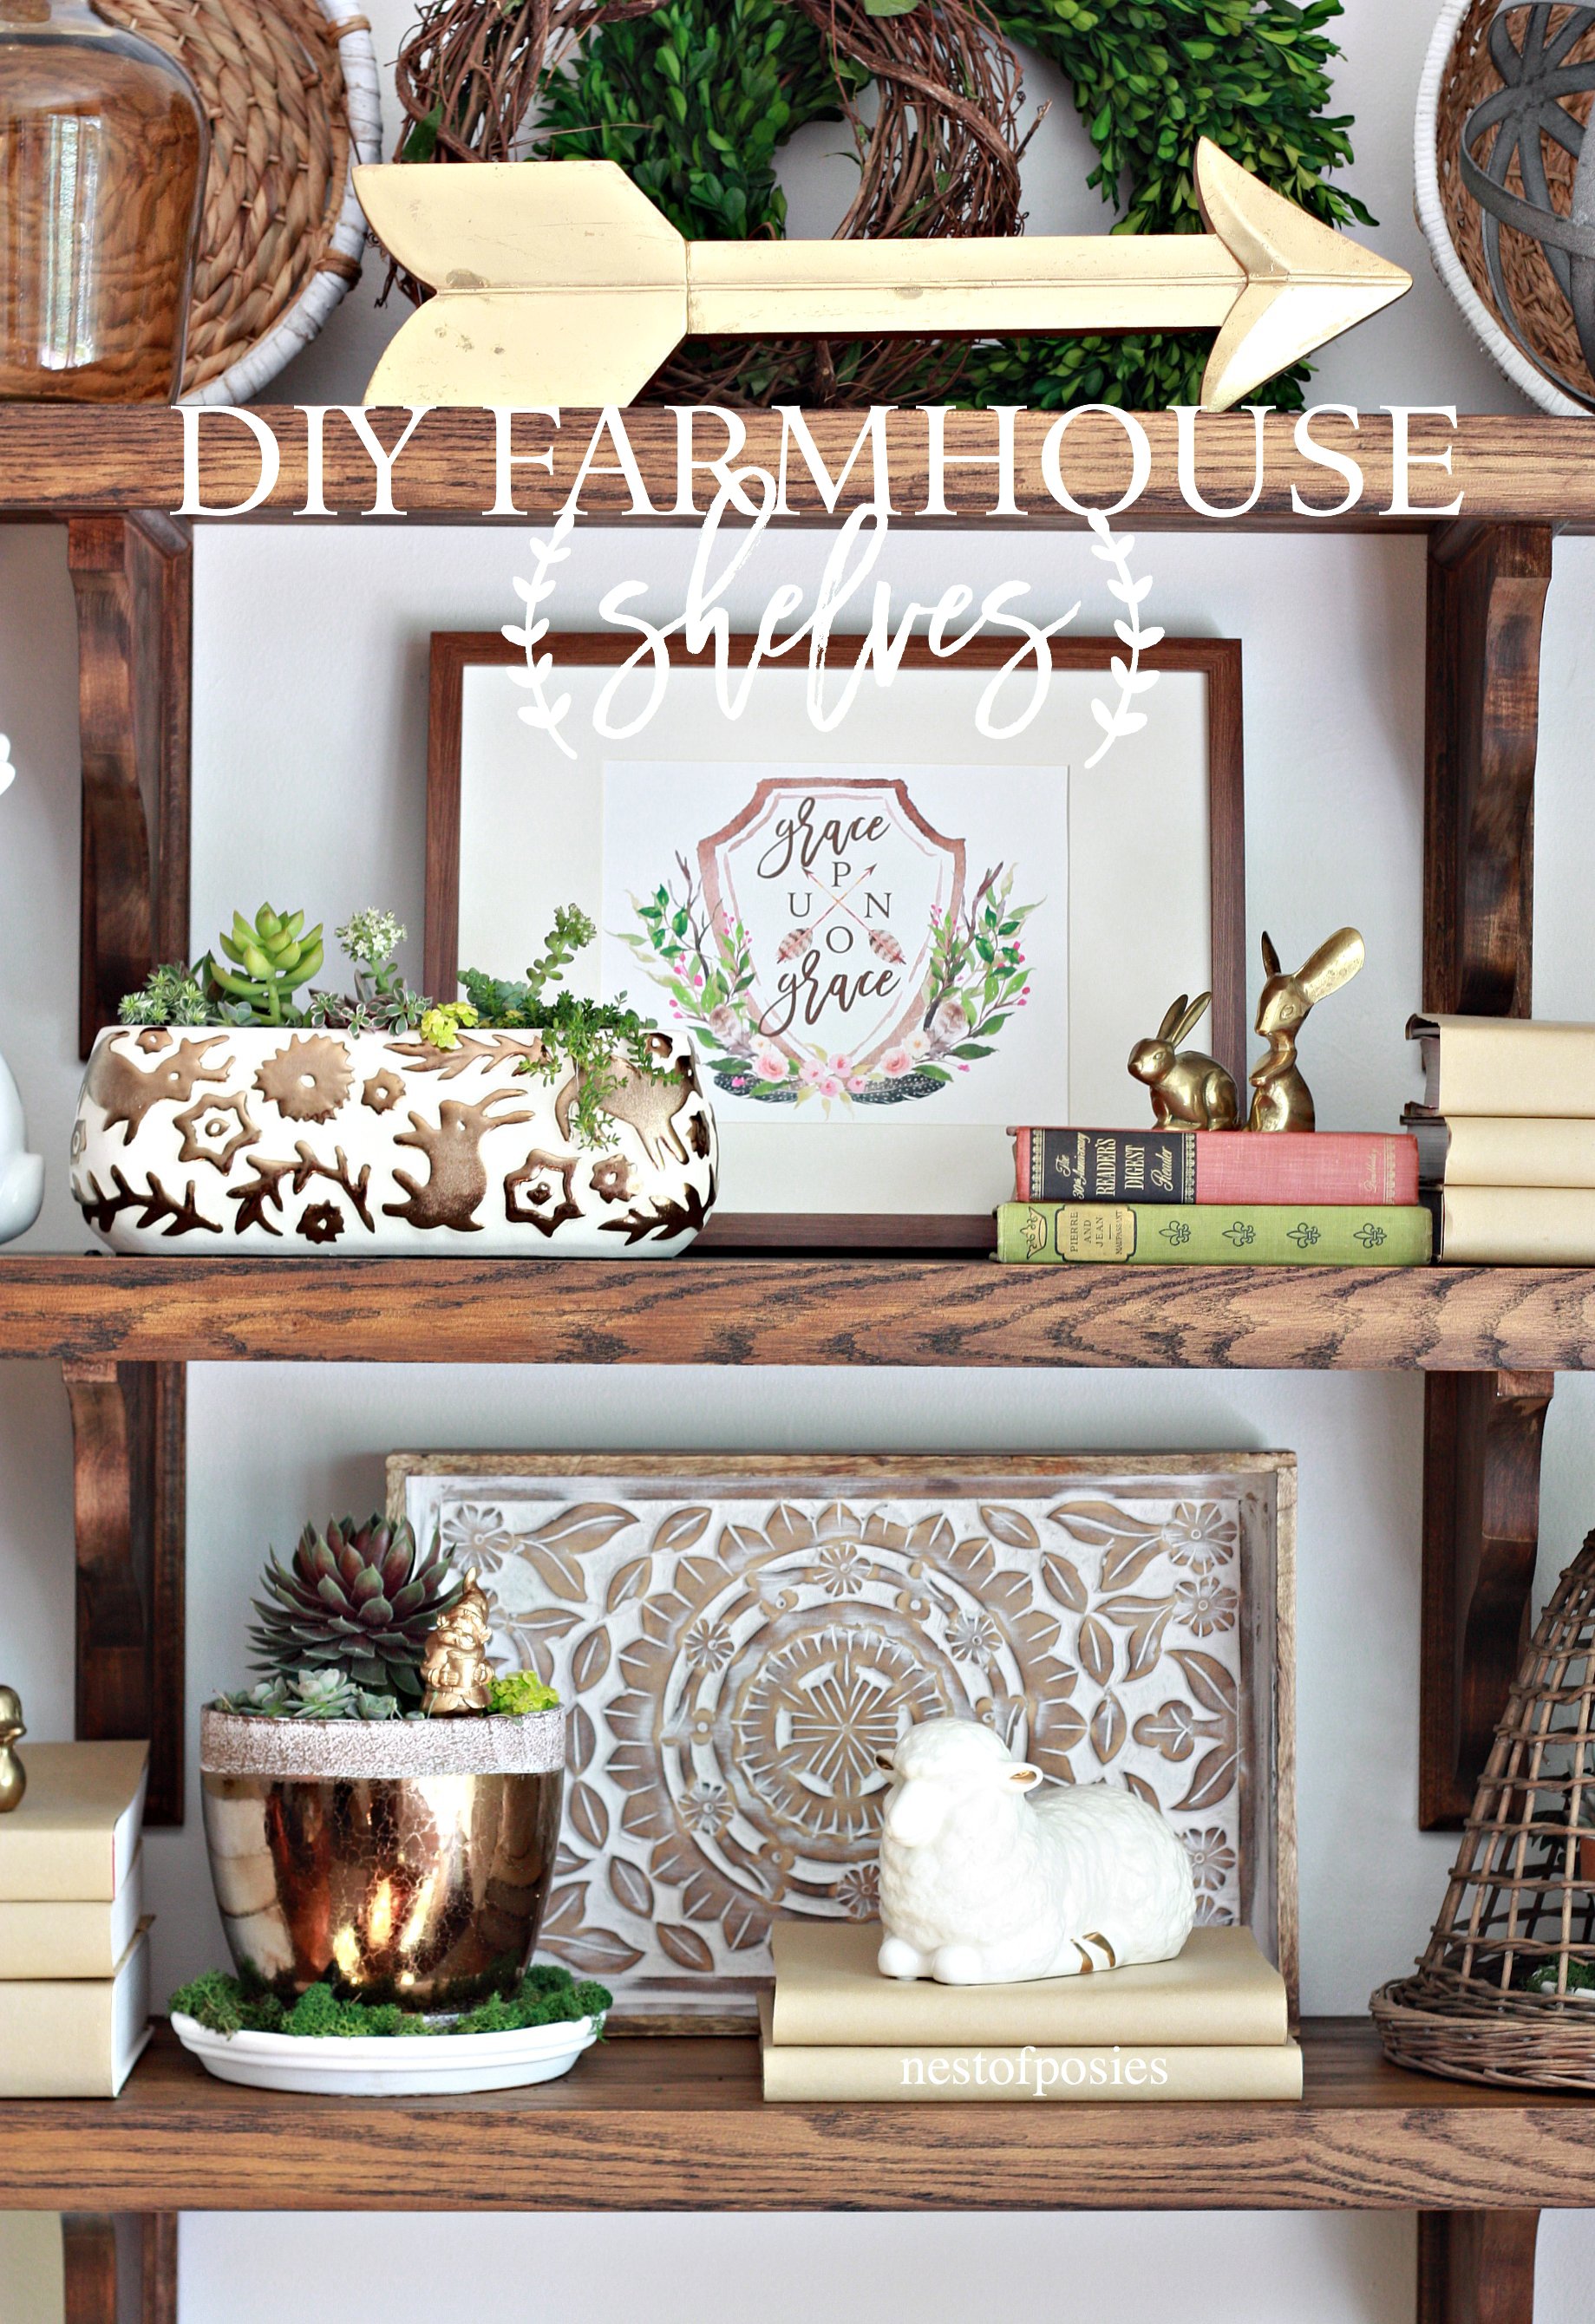 DIY Farmhouse Shelves & styling tips